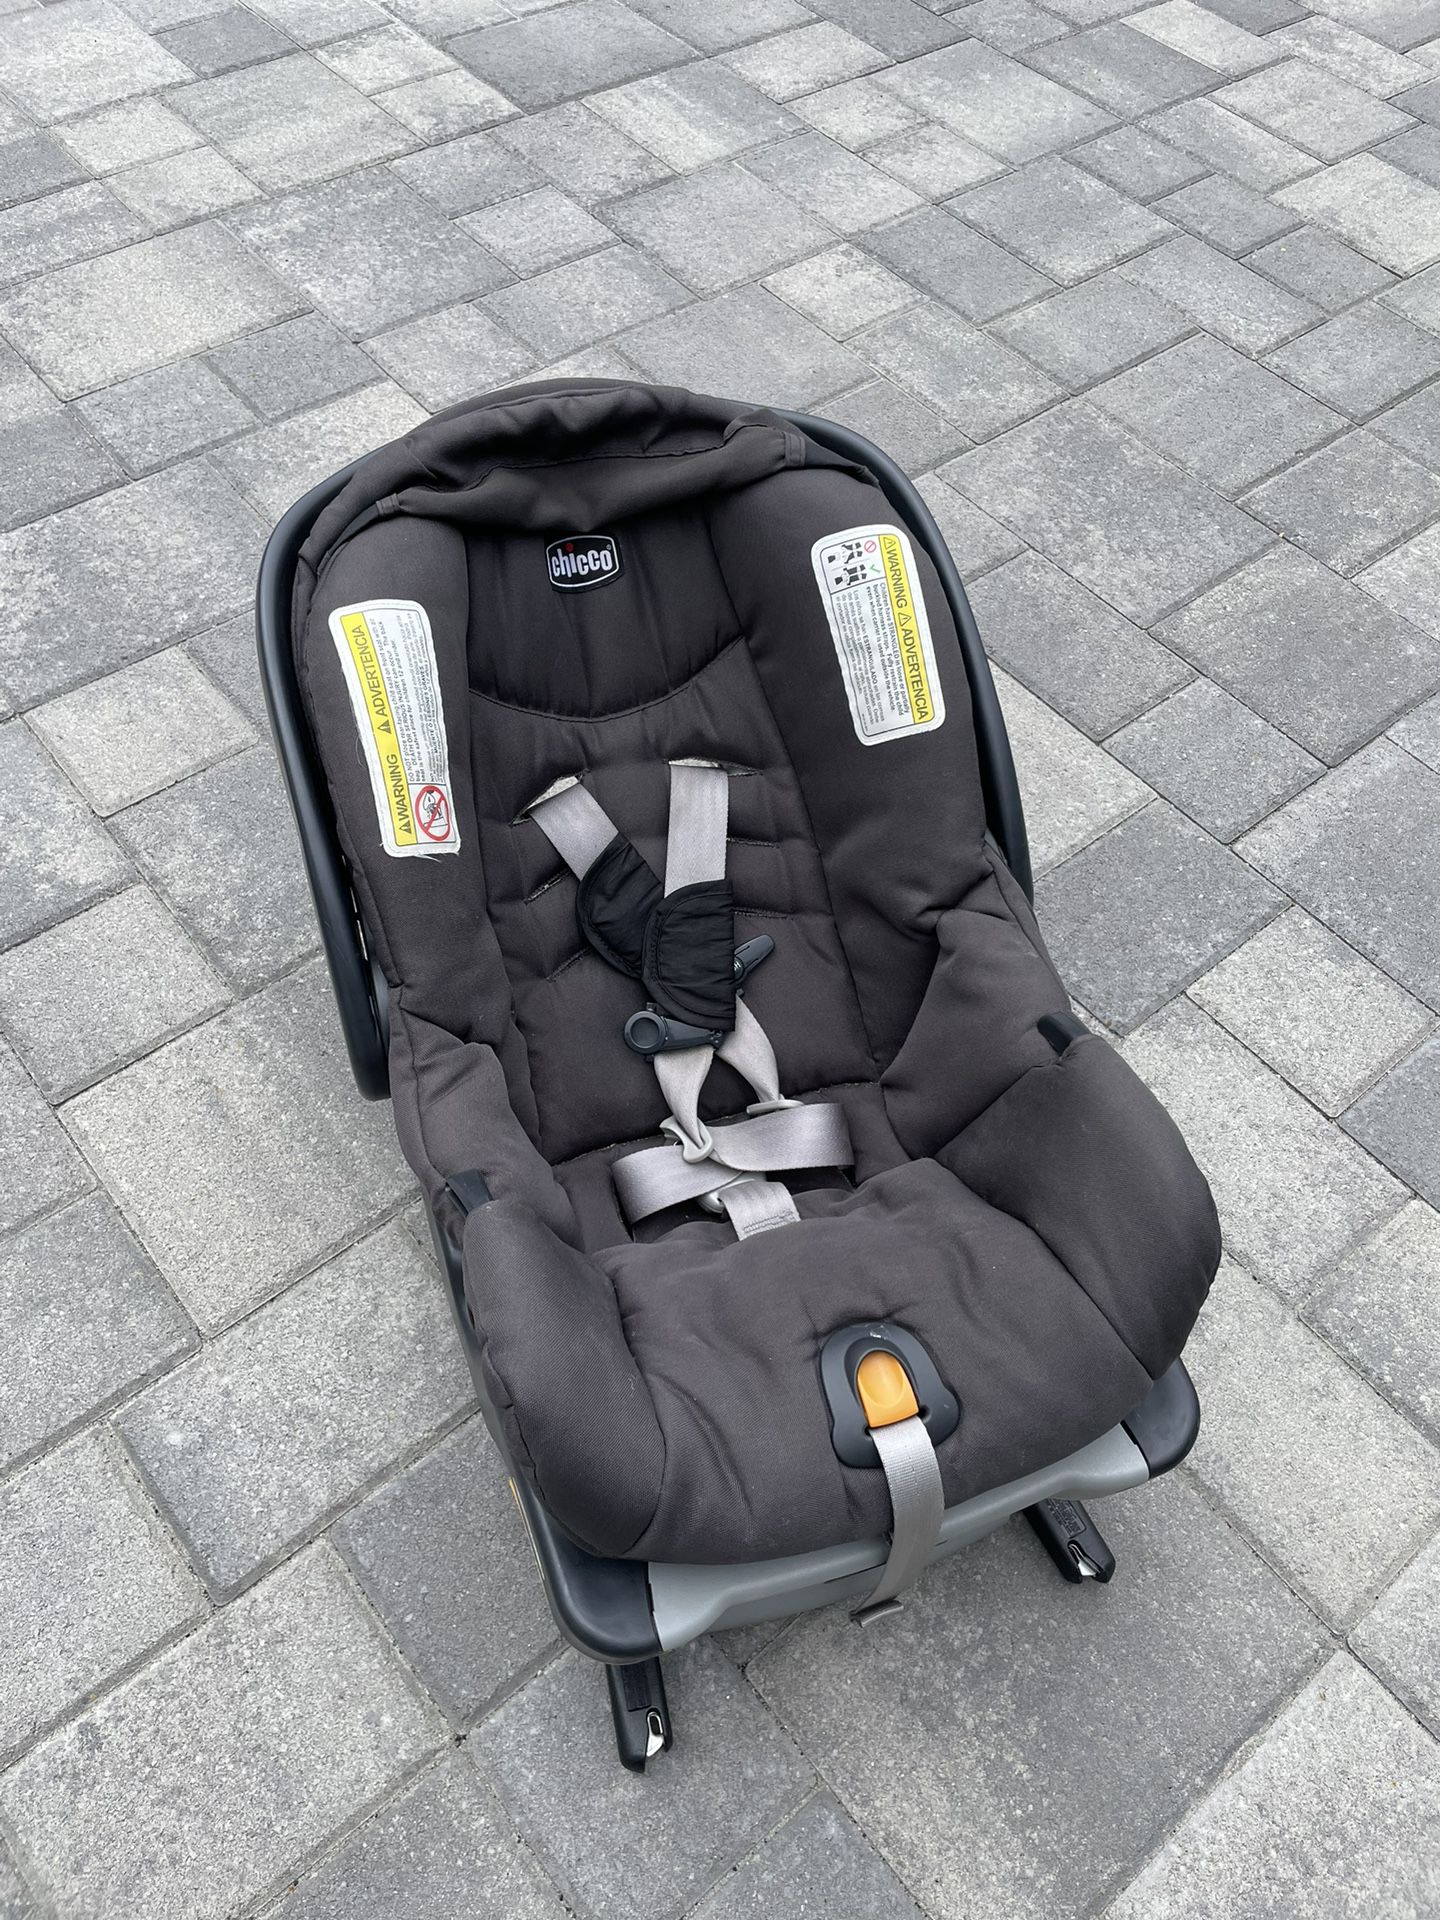 Infant car seat 